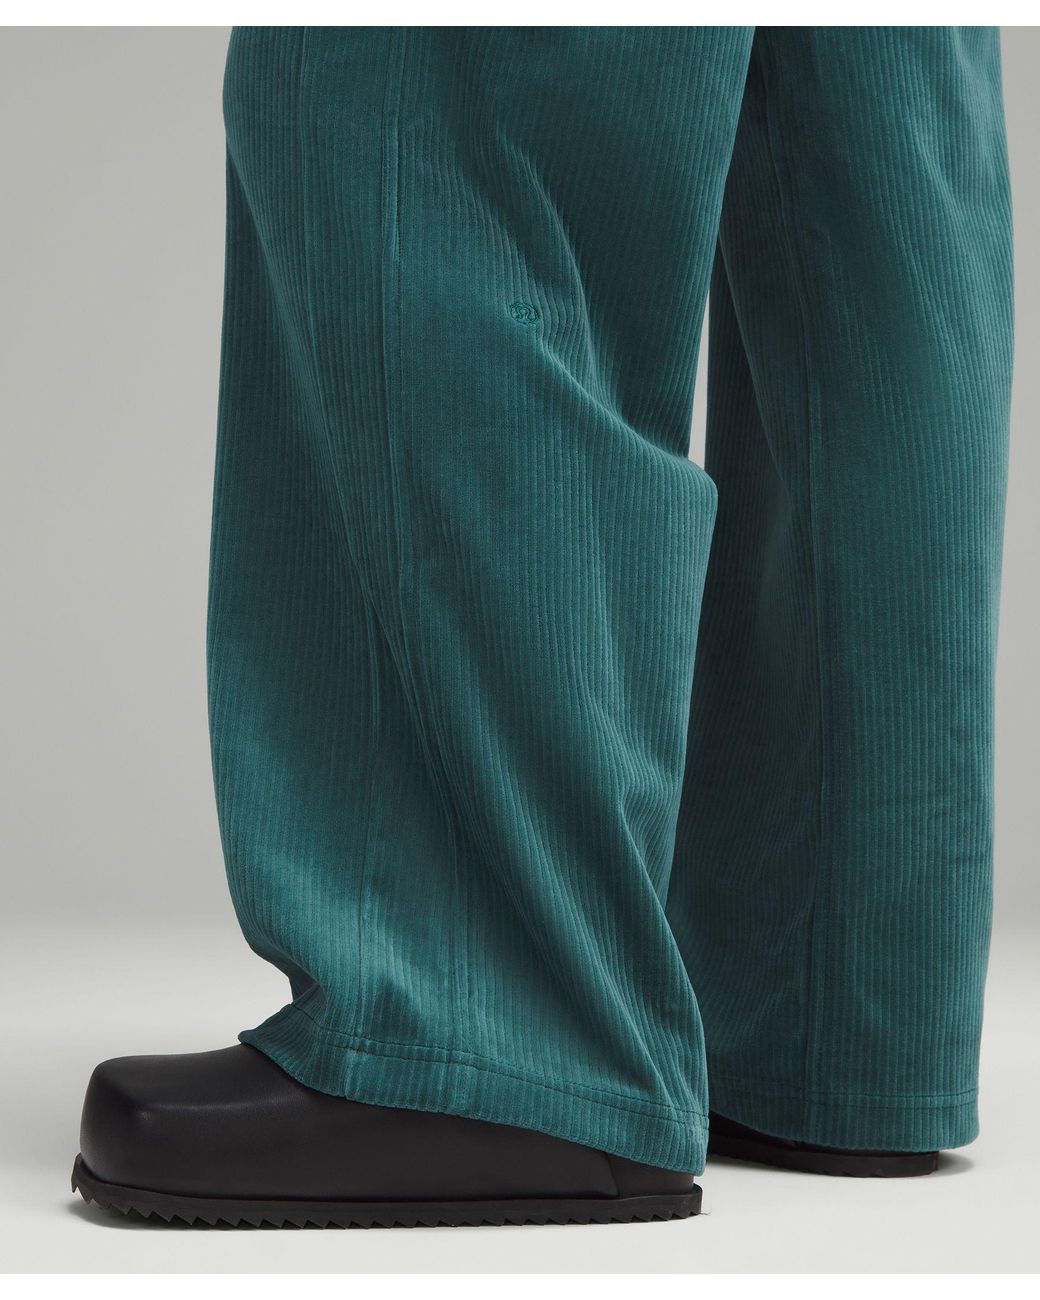 Scuba Track Jacket + wide-leg pant - Velvet Cord, Storm teal, both size 8 :  r/lululemon